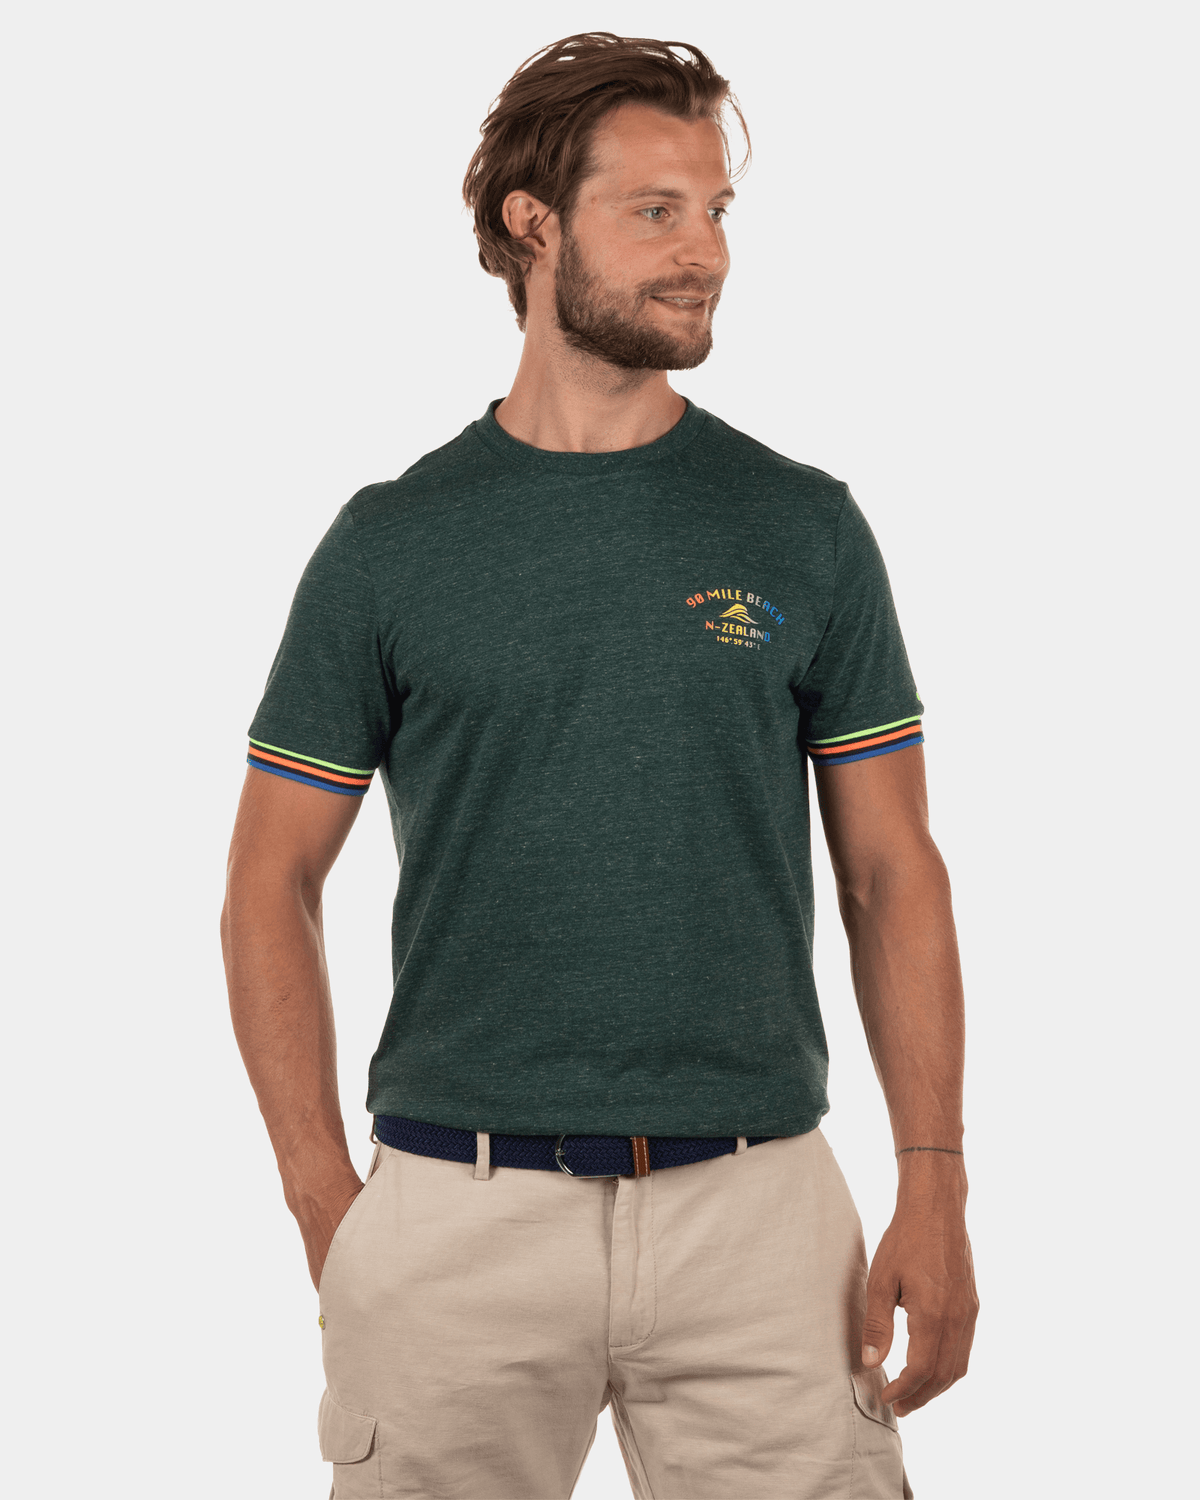 Kohangapiripiri sportliches T-Shirt - Lead Green